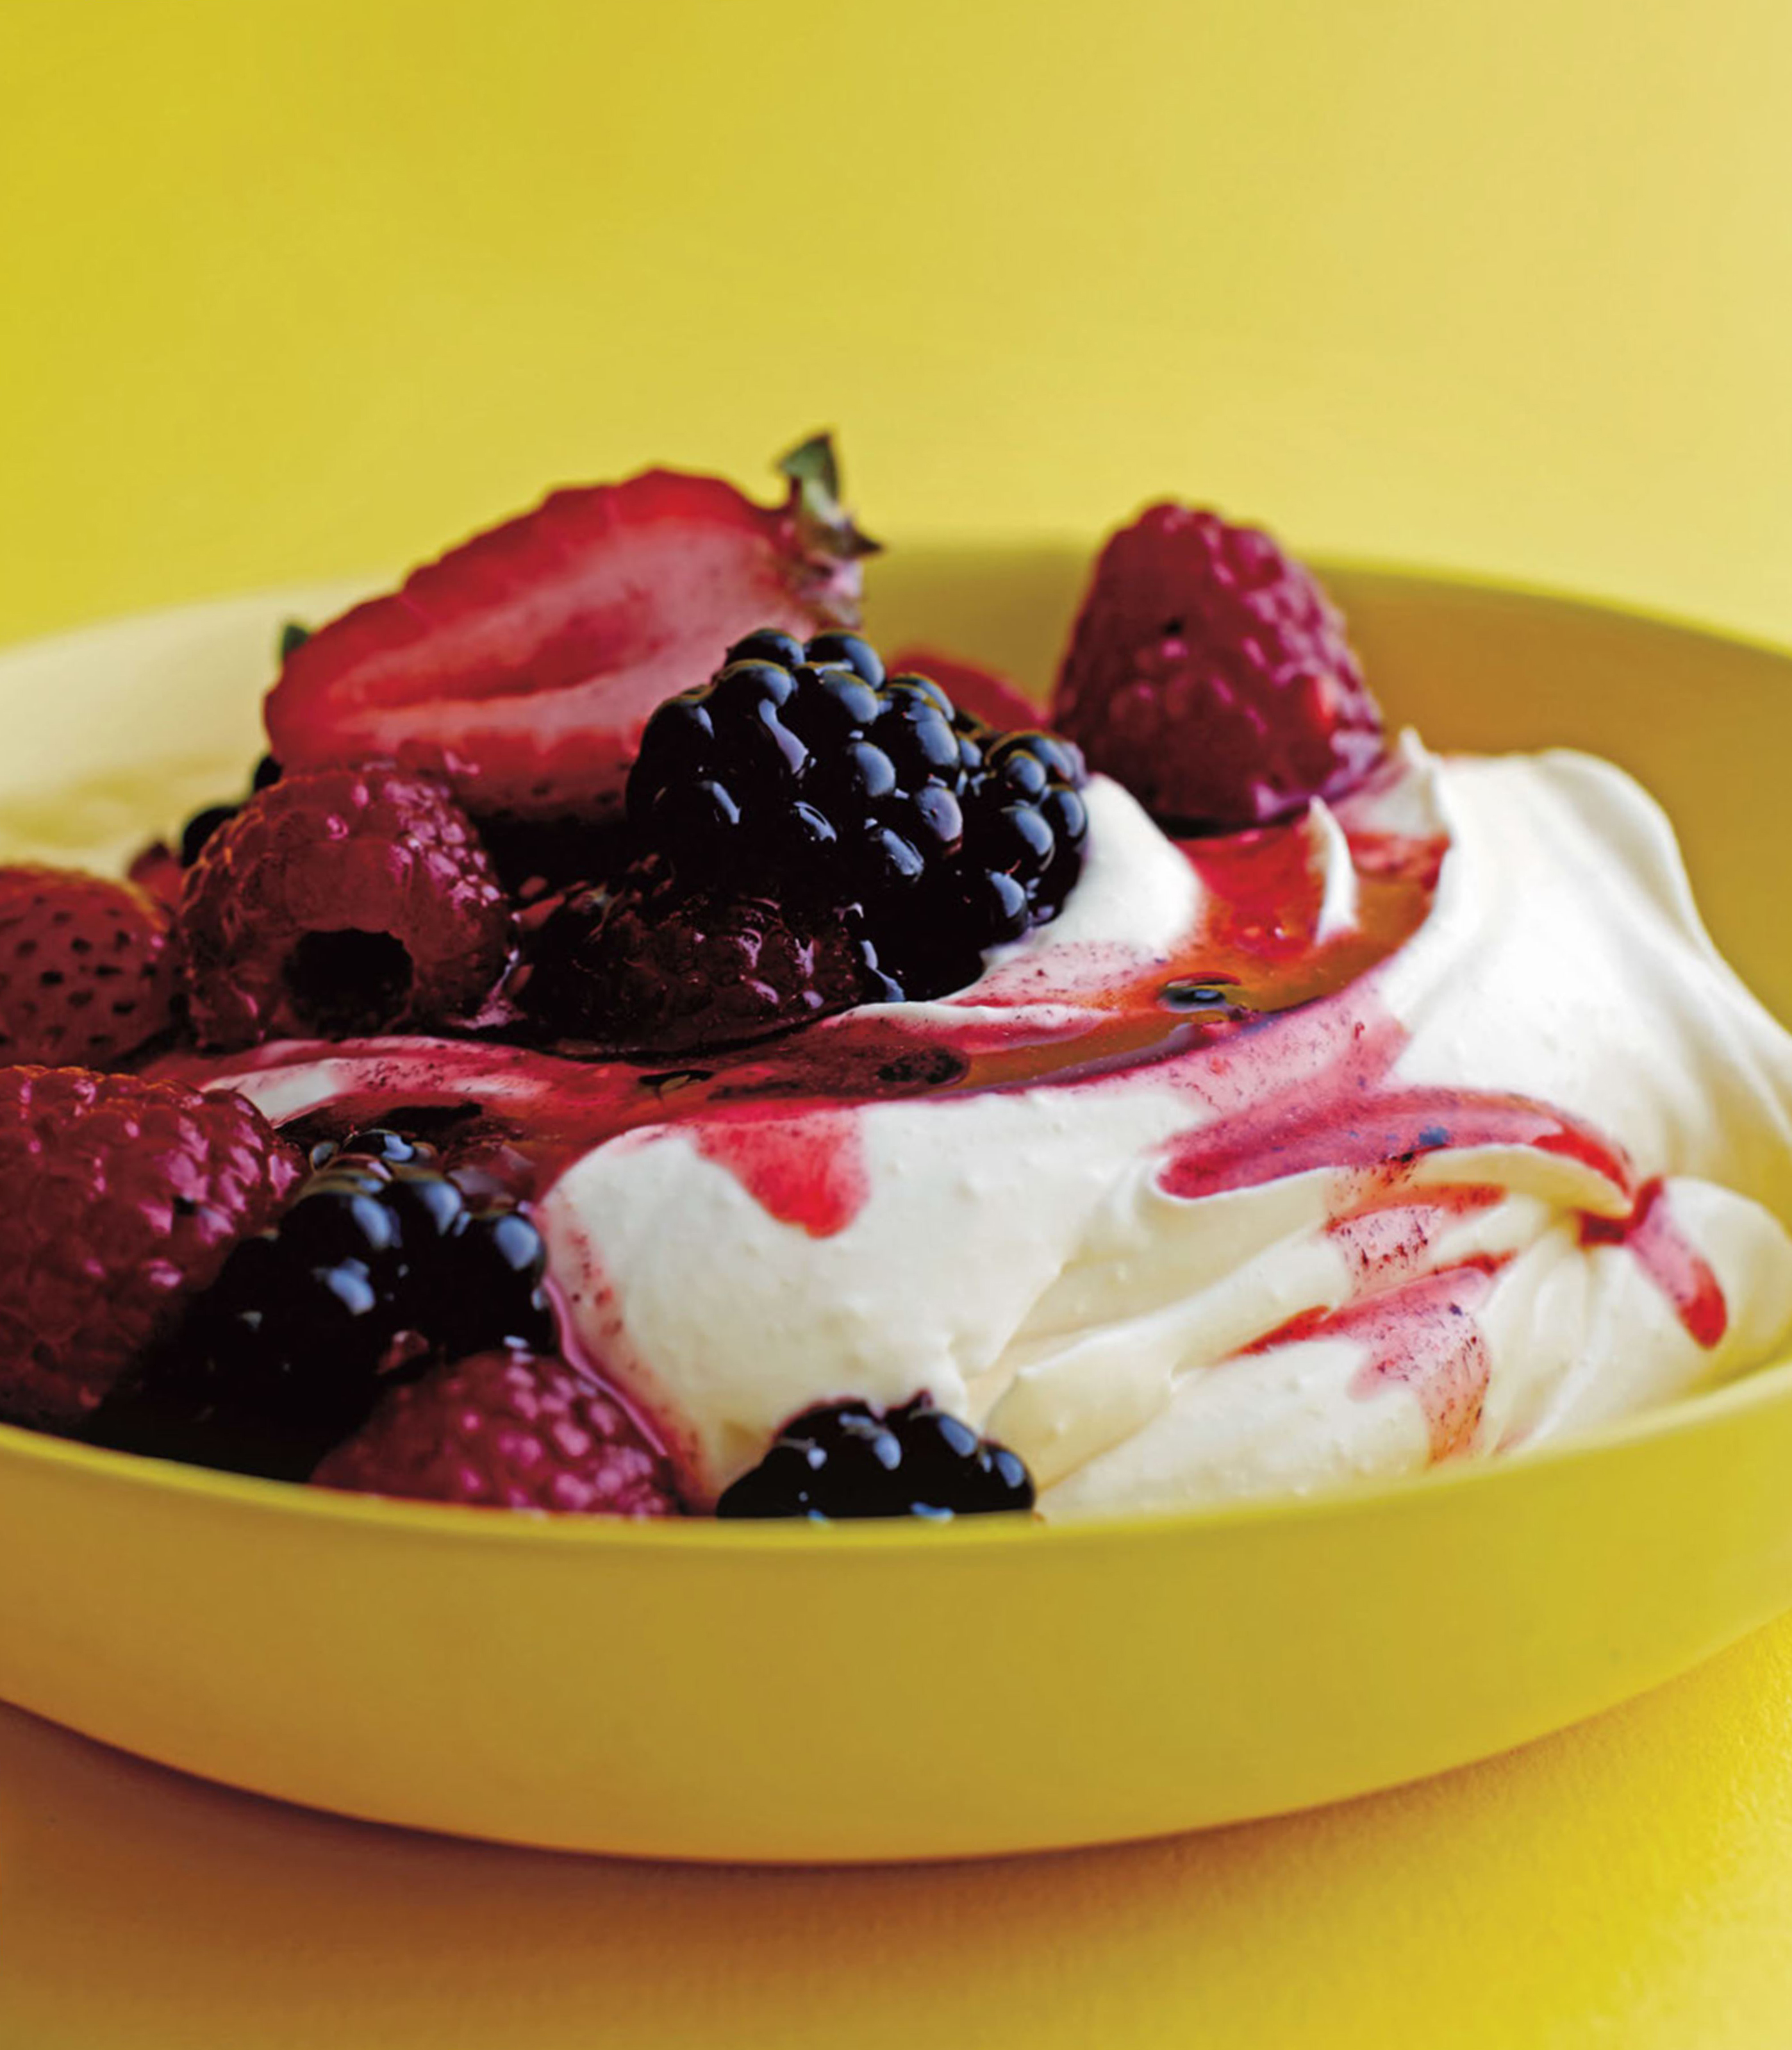 Supa-thick yoghurt and berries